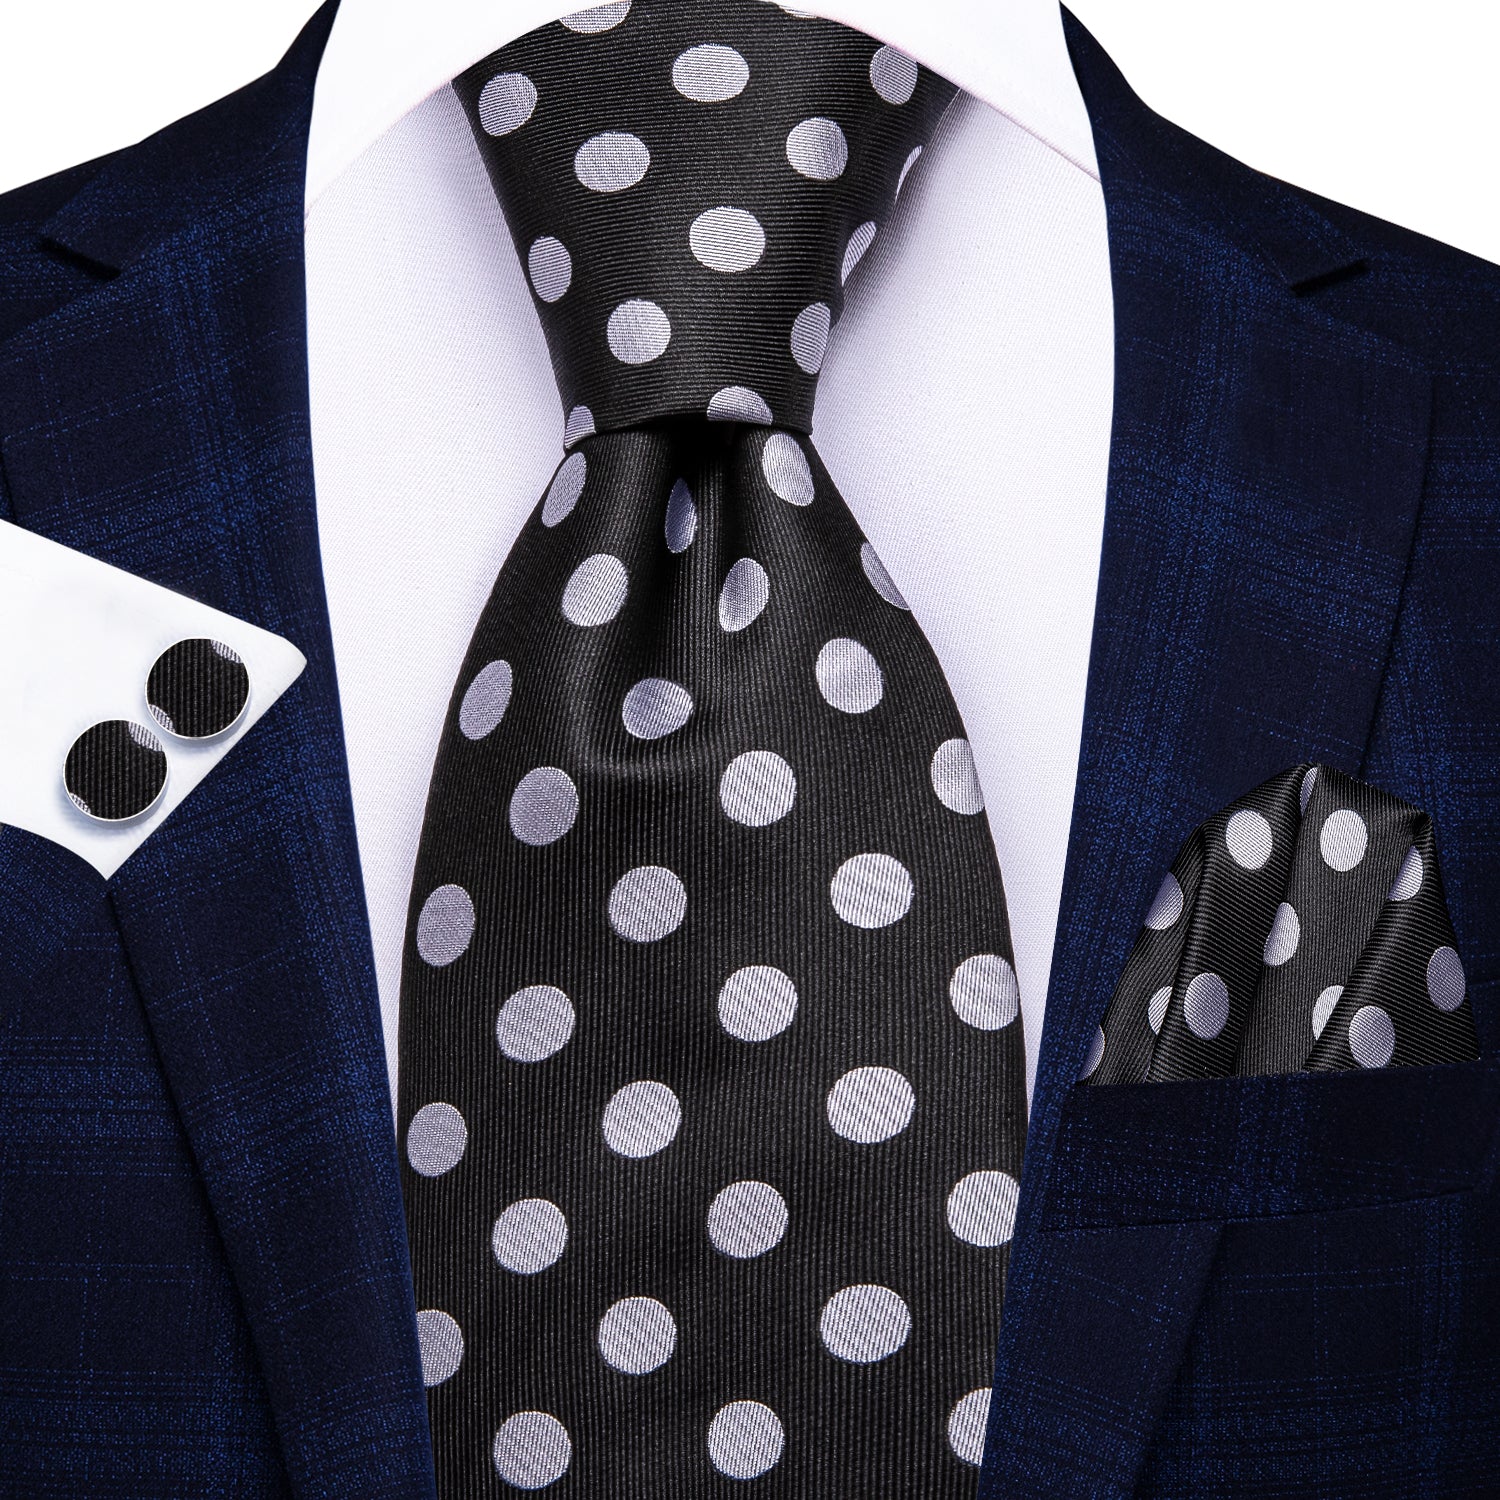 Black White Polka Dot 67 Inches Extra Long Tie Handkerchief Cufflinks Set